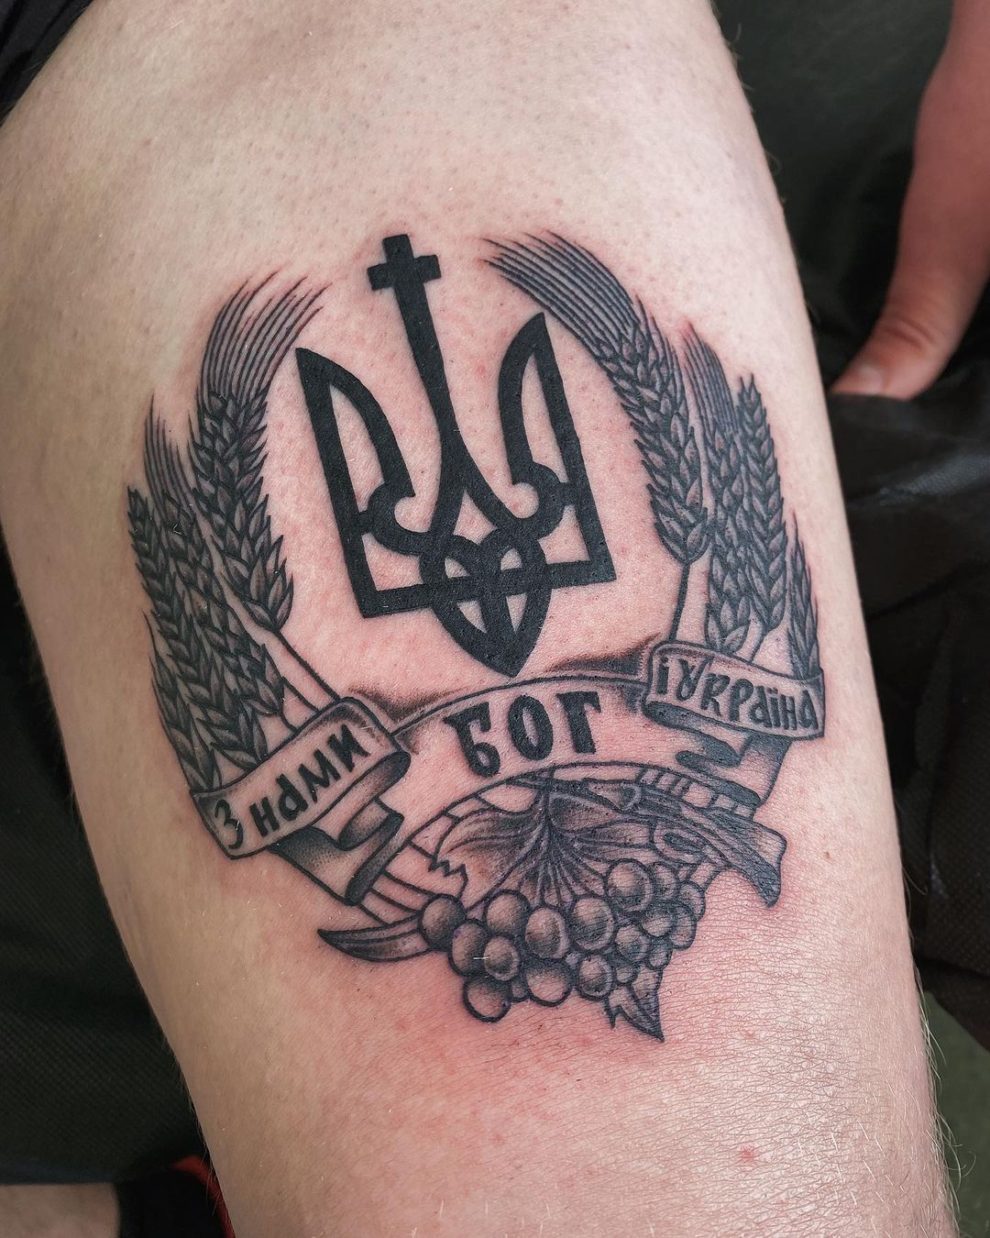 Balidan Badge Tattoo on Forearm. | Tattoos, Patriotic tattoos, Forearm  tattoos